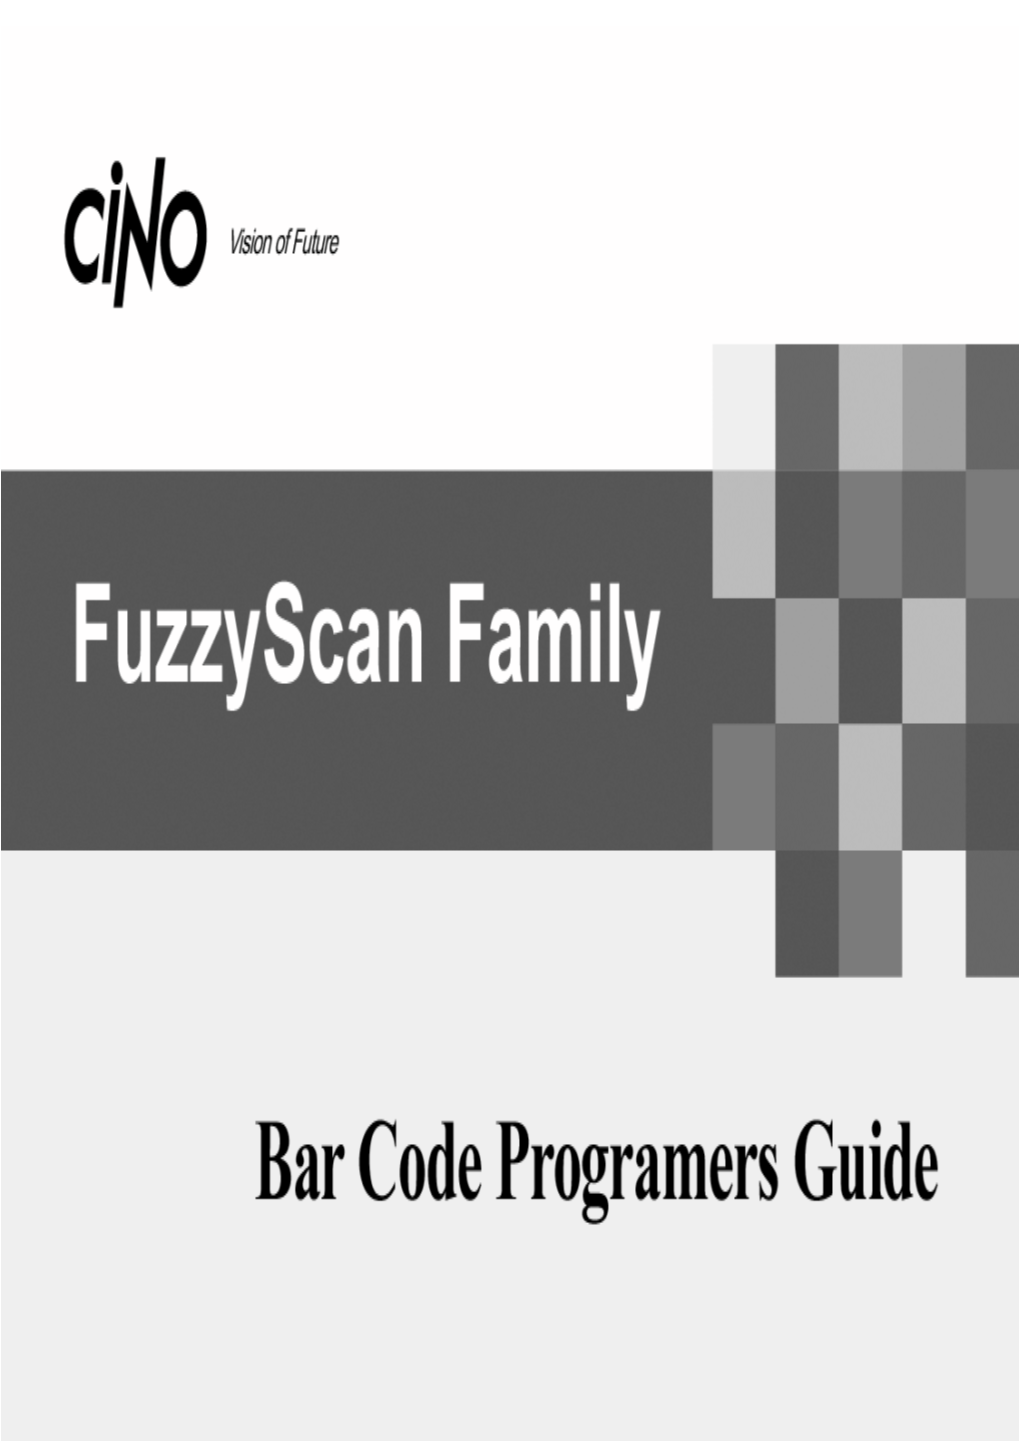 Bar Code Programming Guide Configure Your Fuzzyscan